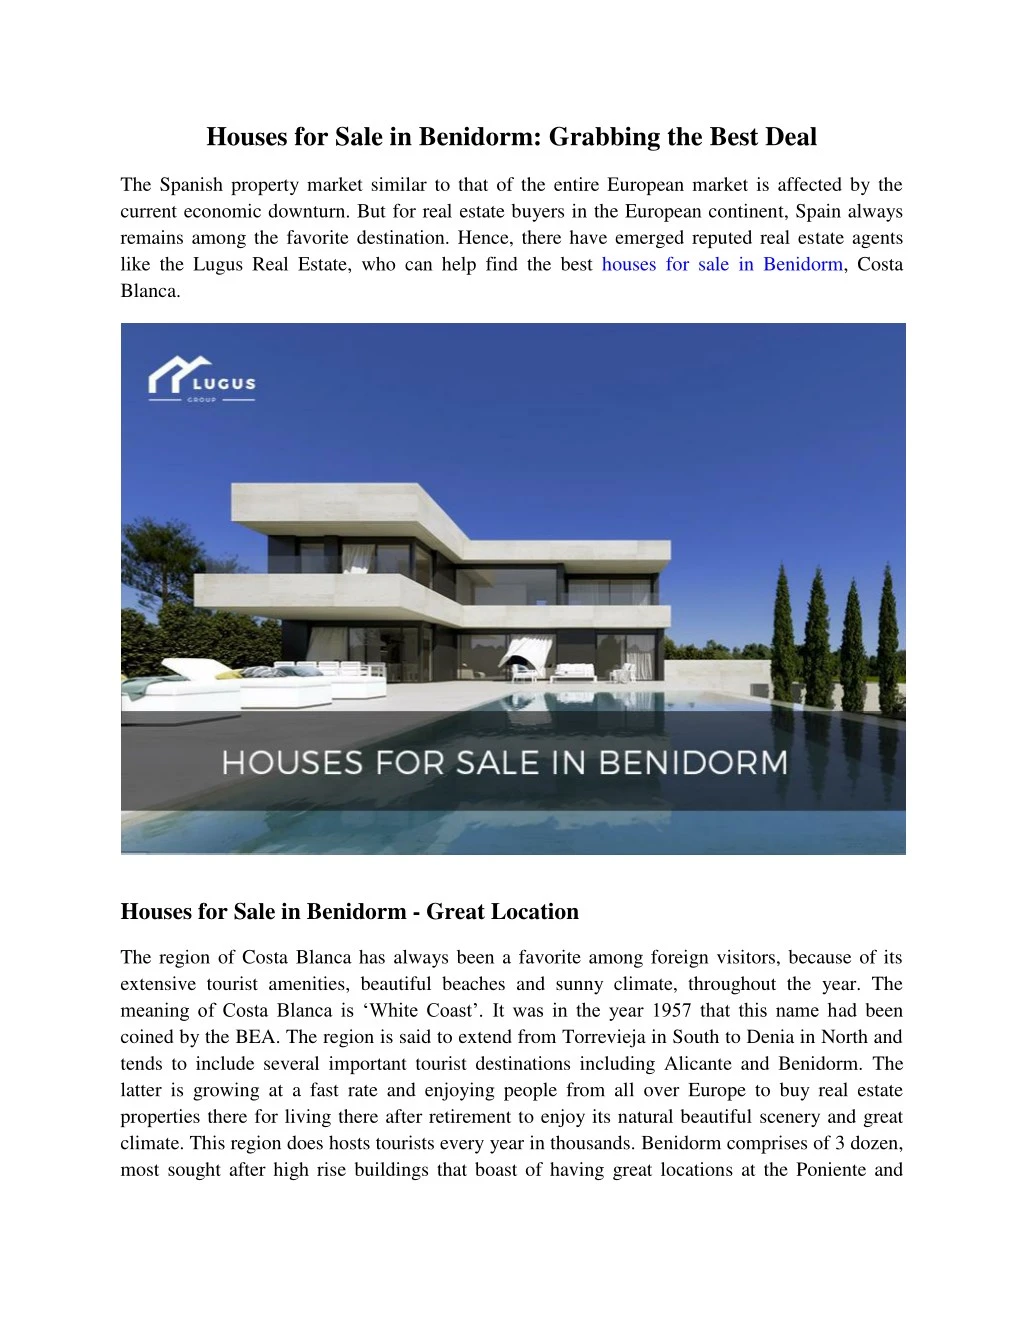 houses for sale in benidorm grabbing the best deal